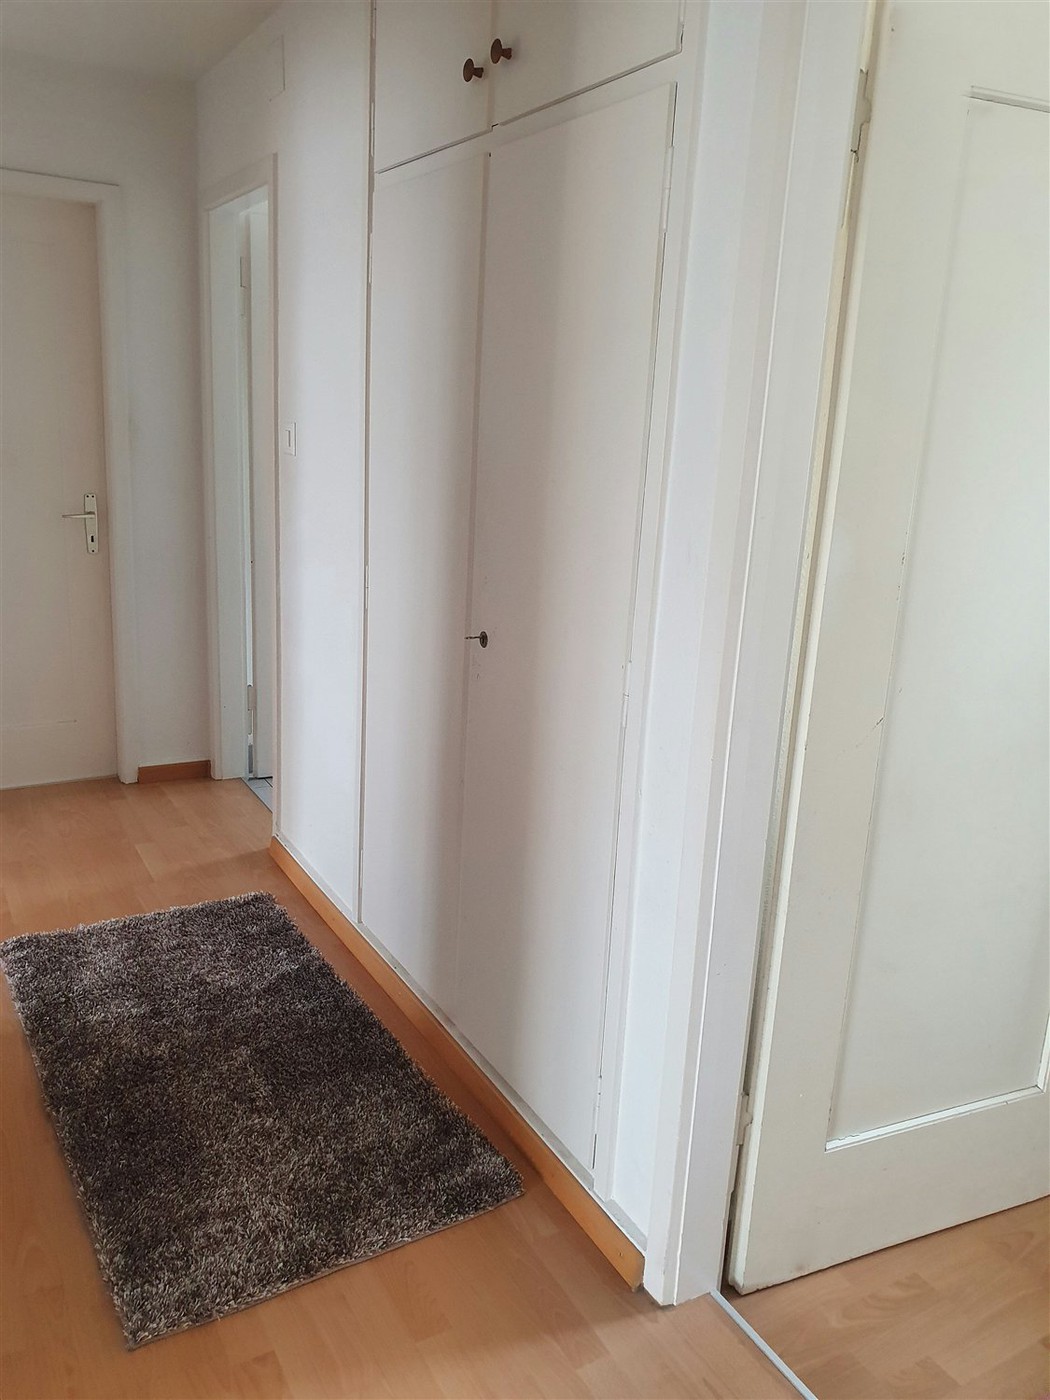 3 Zimmer-Wohnung in Neuhausen am Rheinfall mieten - Flatfox